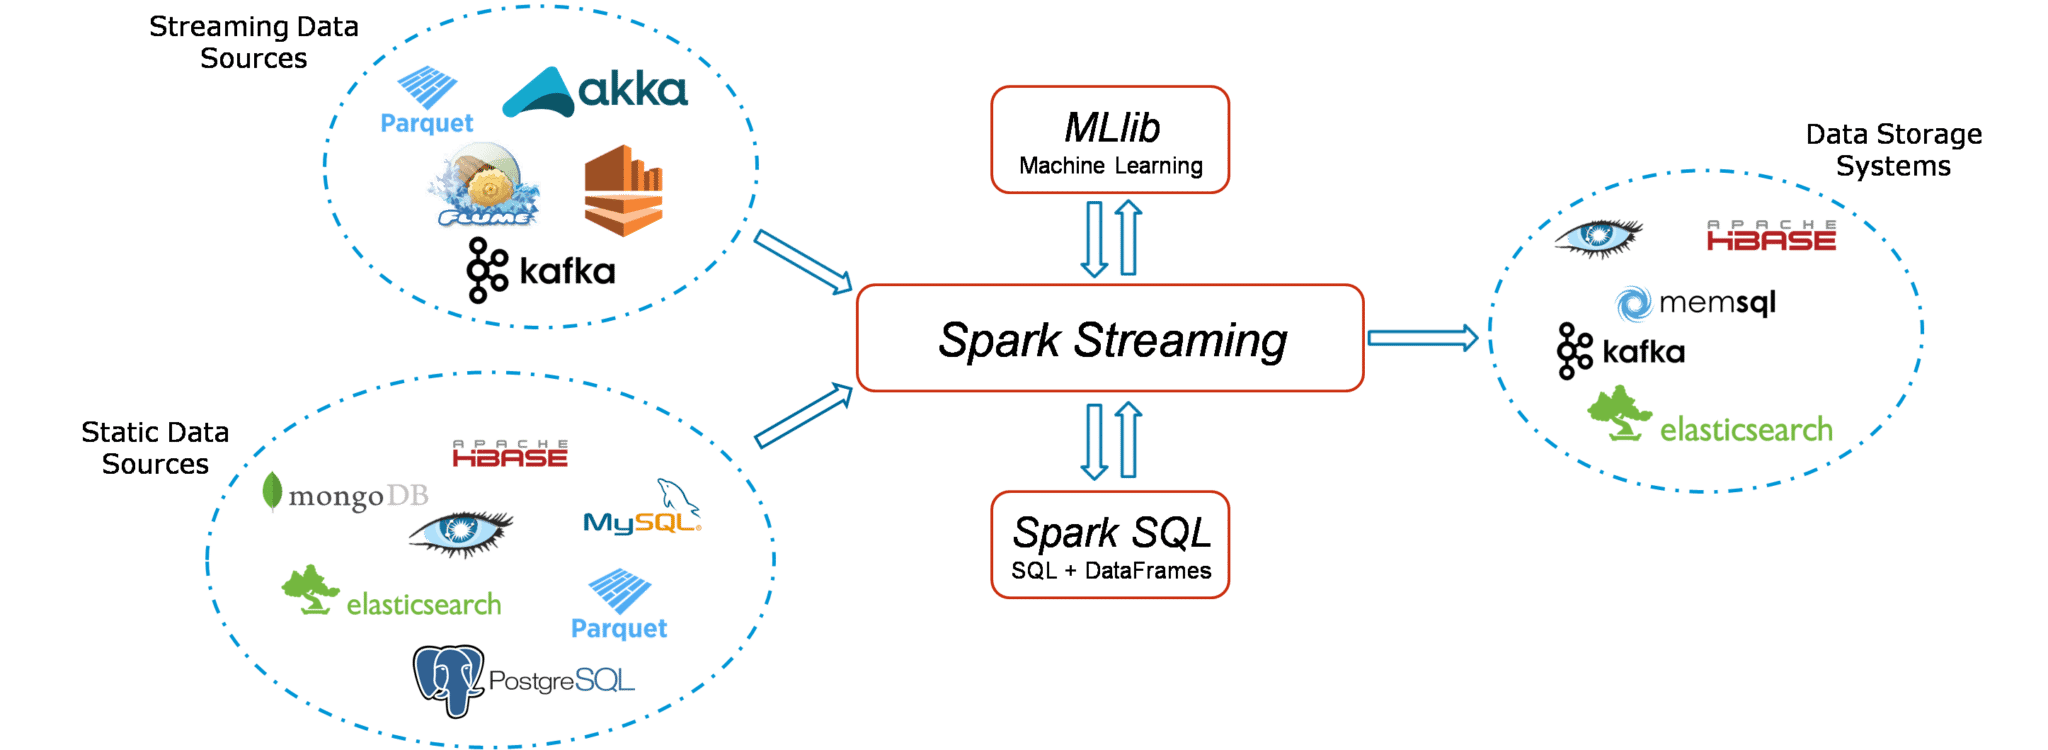 Overview - Spark Streaming - Edureka